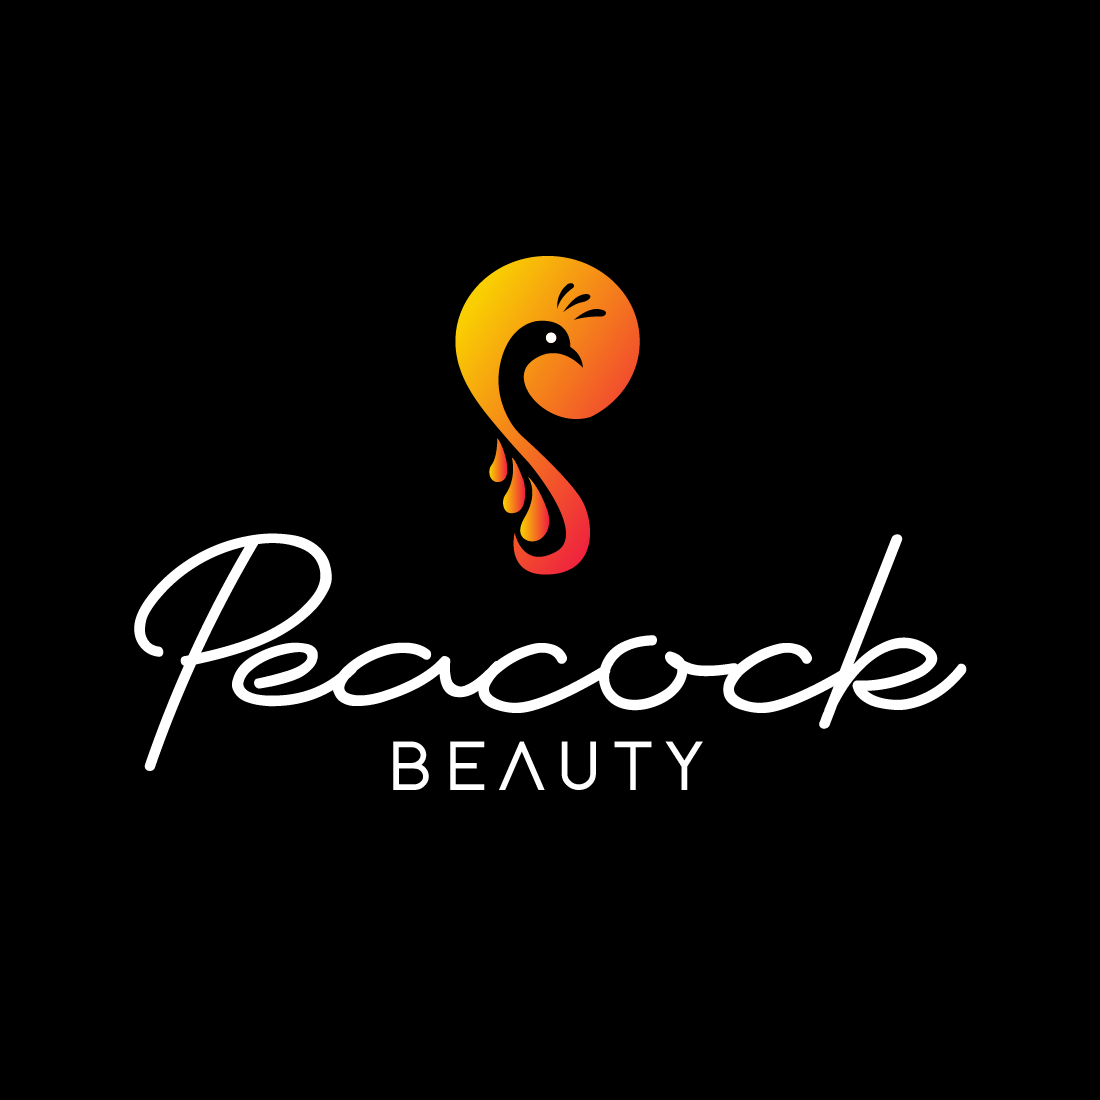 Beauty Logo Peacock Vector Template cover image.